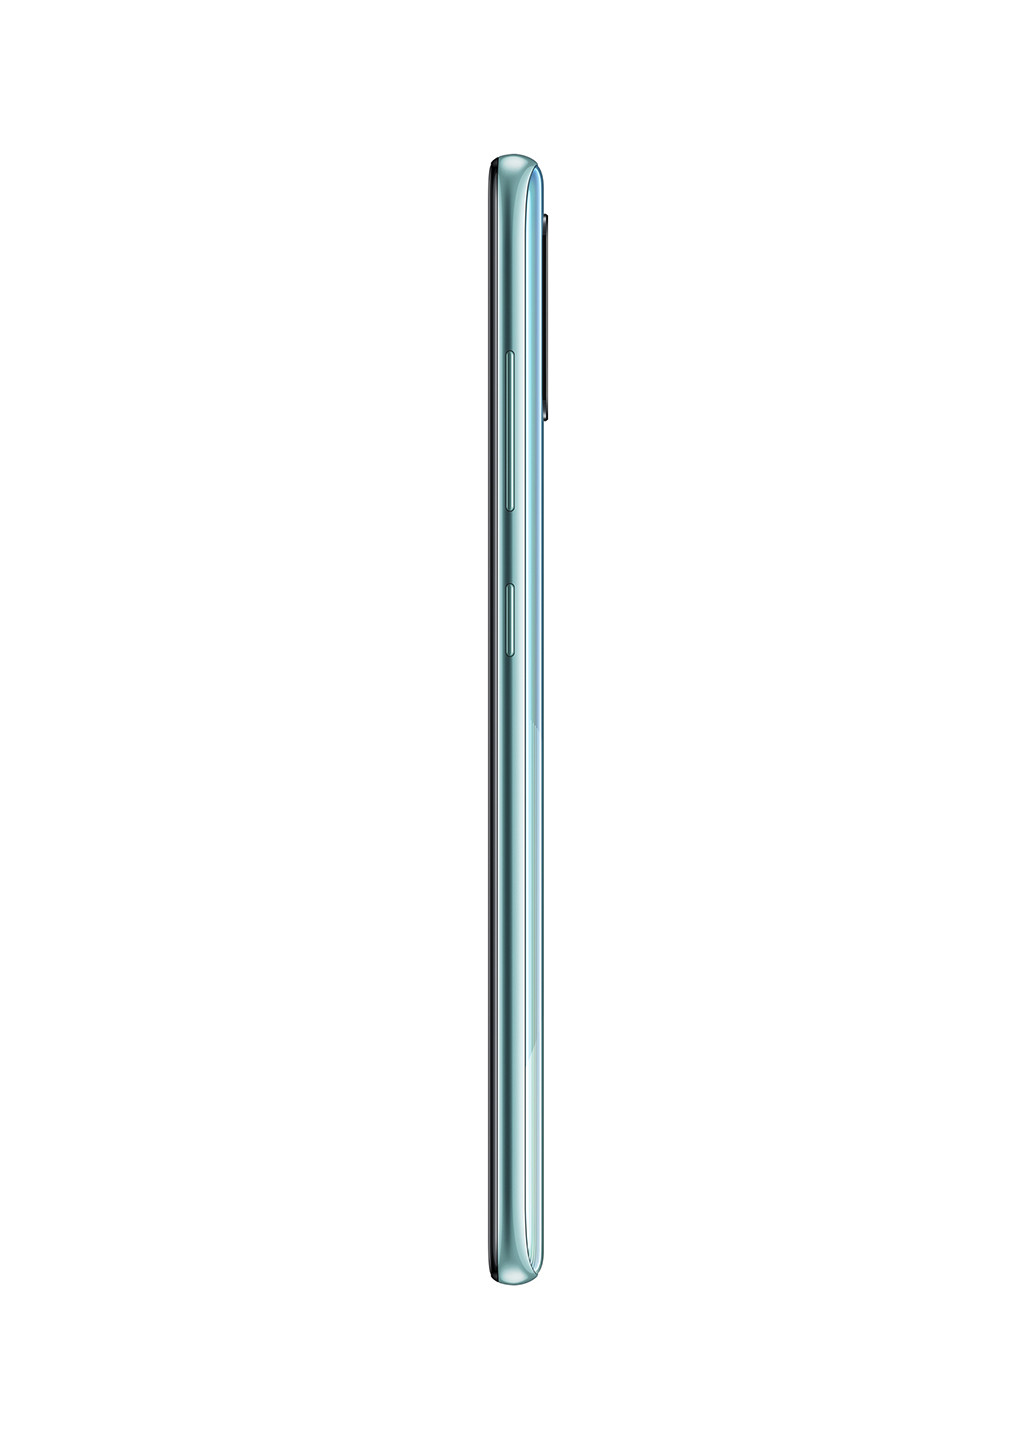 Смартфон Samsung galaxy a51 6/128gb prism crush blue (sm-a515fzbwsek) (173695789)